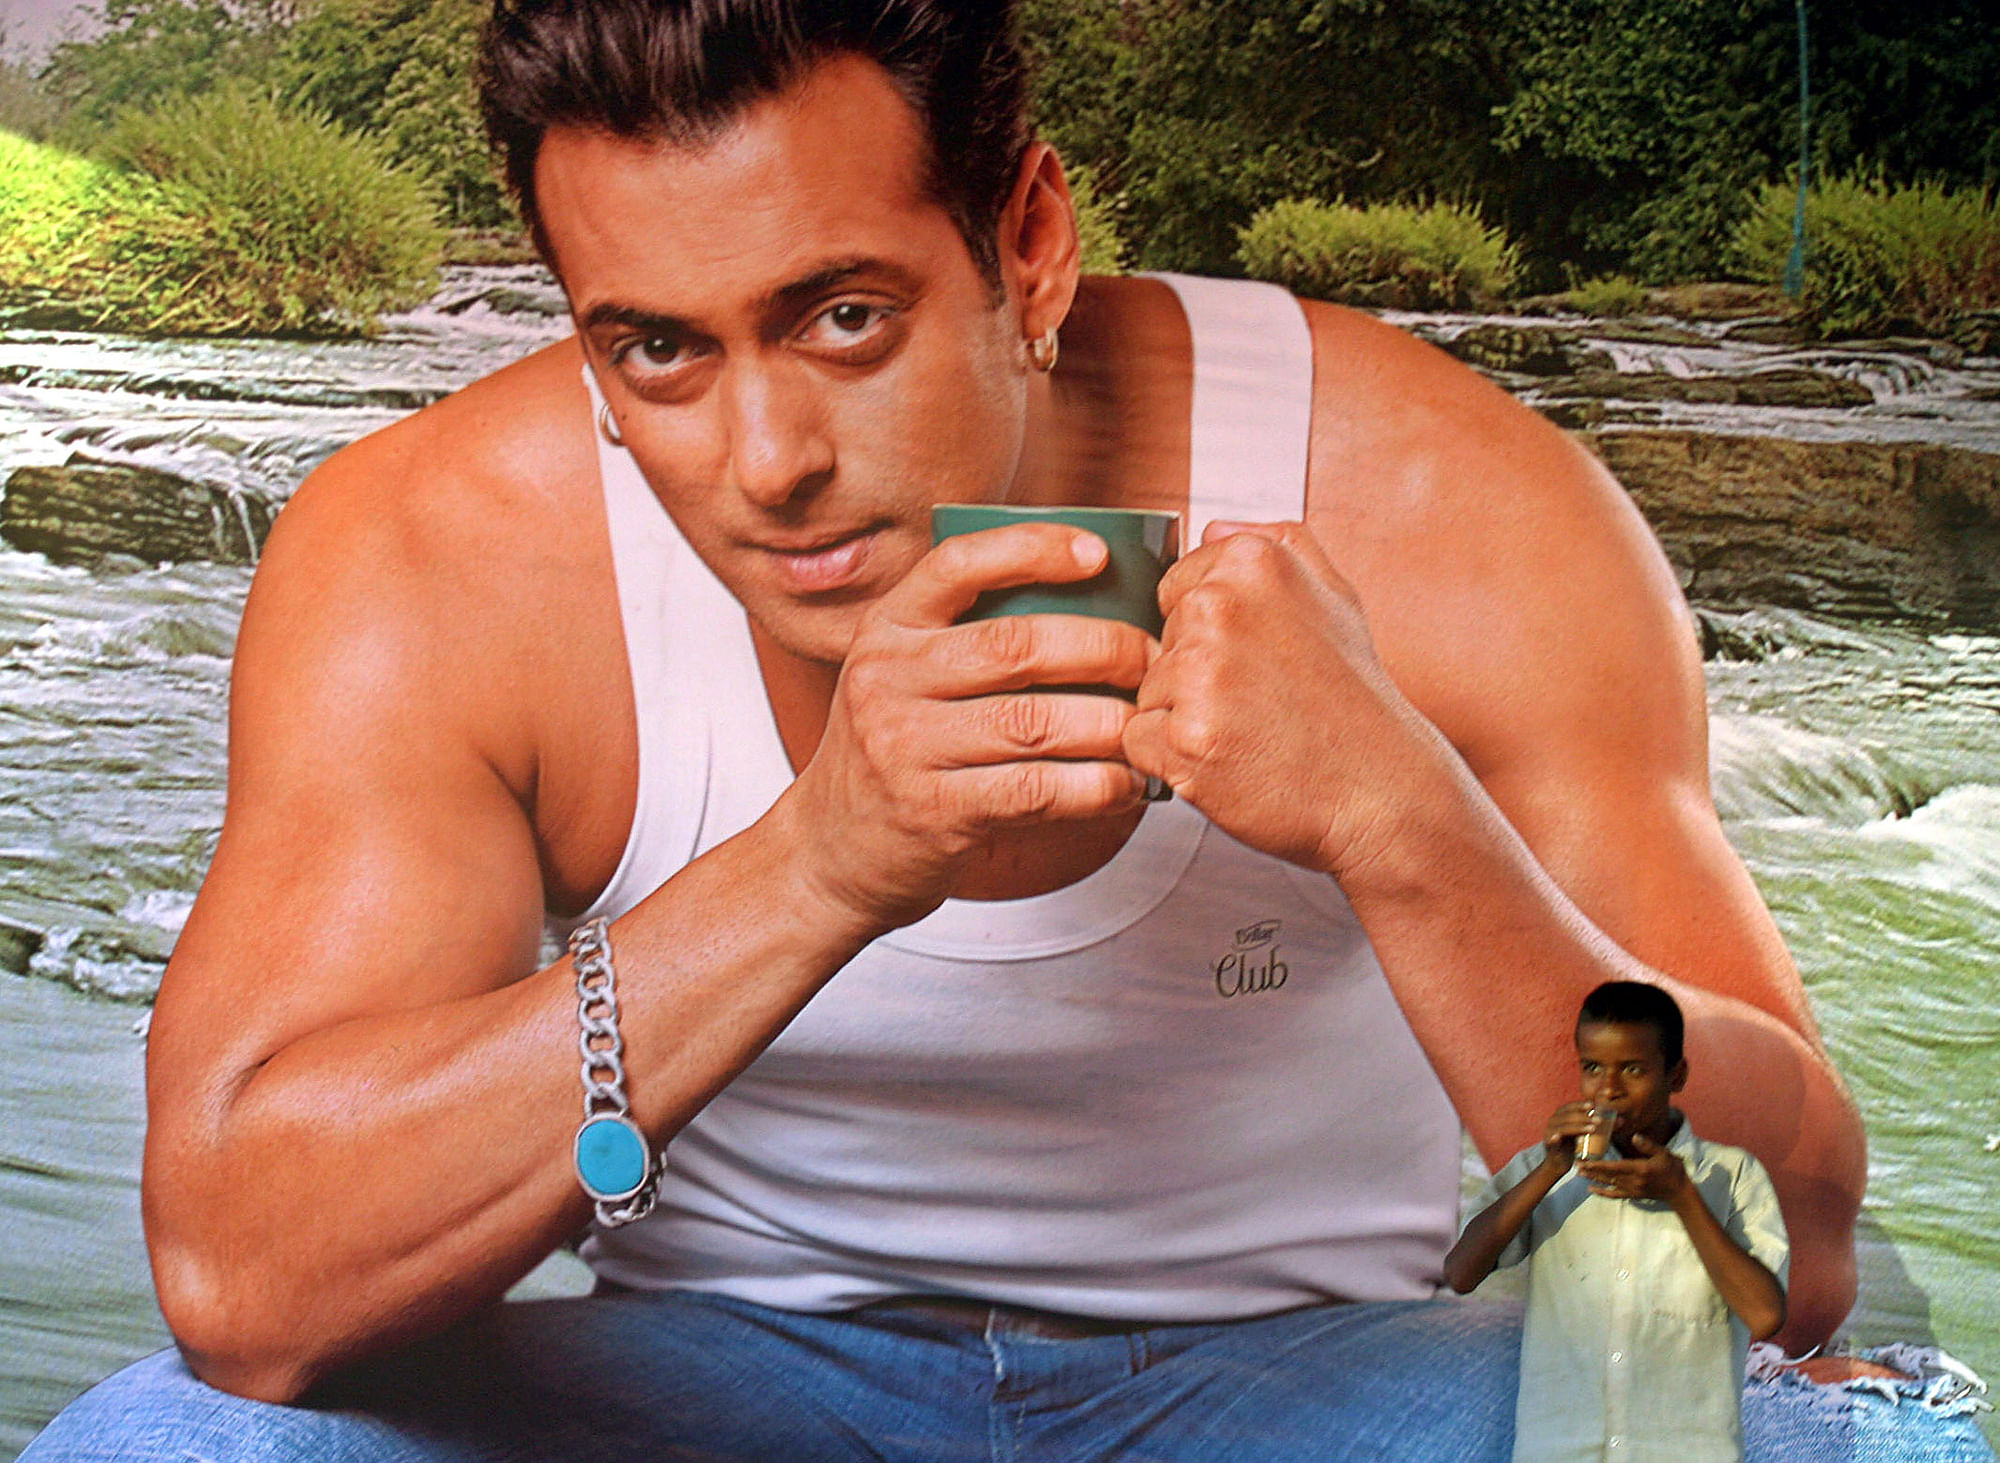 Billboard of an underwear ad featuring Salman Khan, the “aam aadmi”.